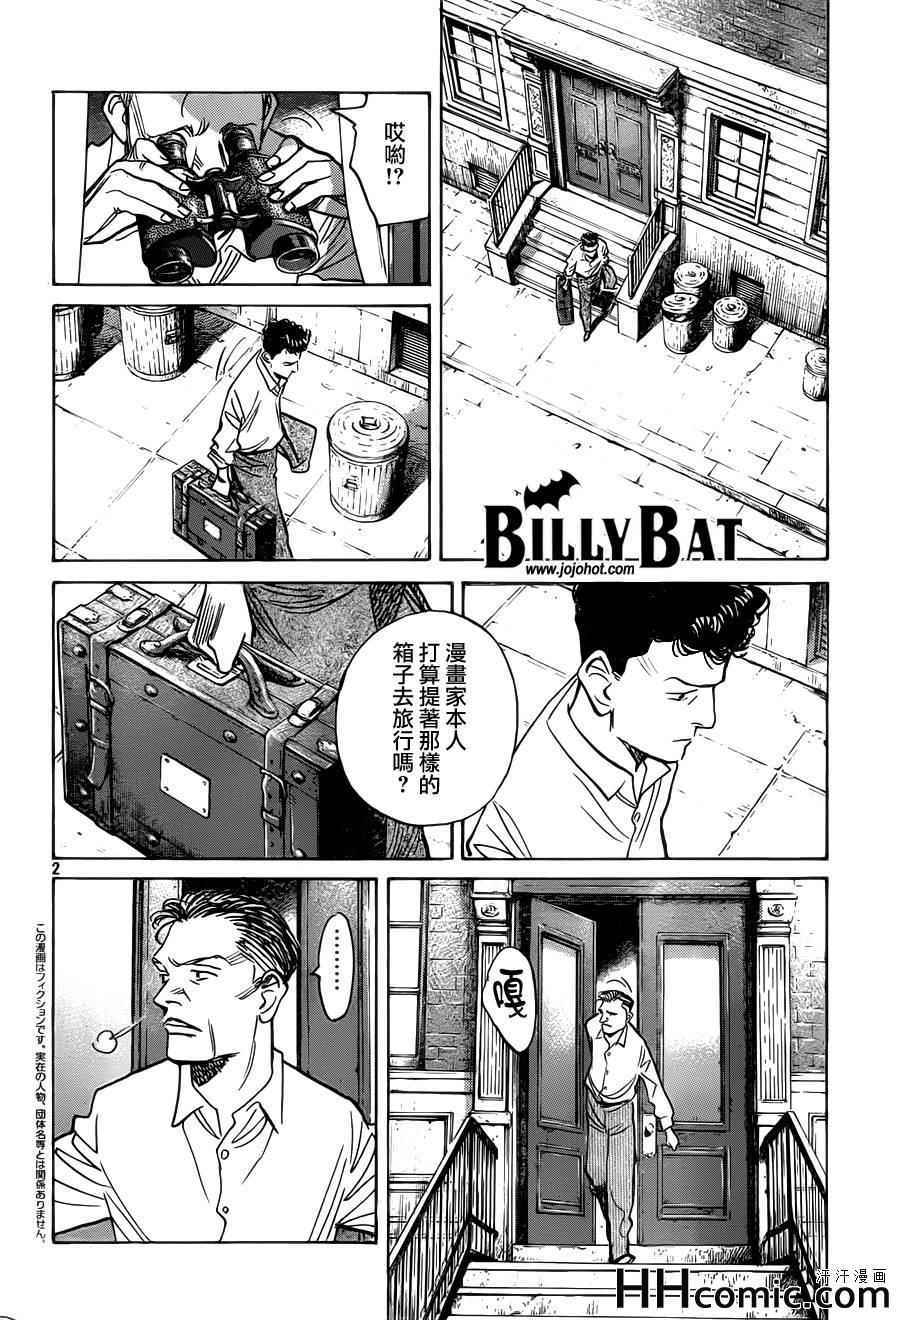 Billy_Bat - 第111话 - 2